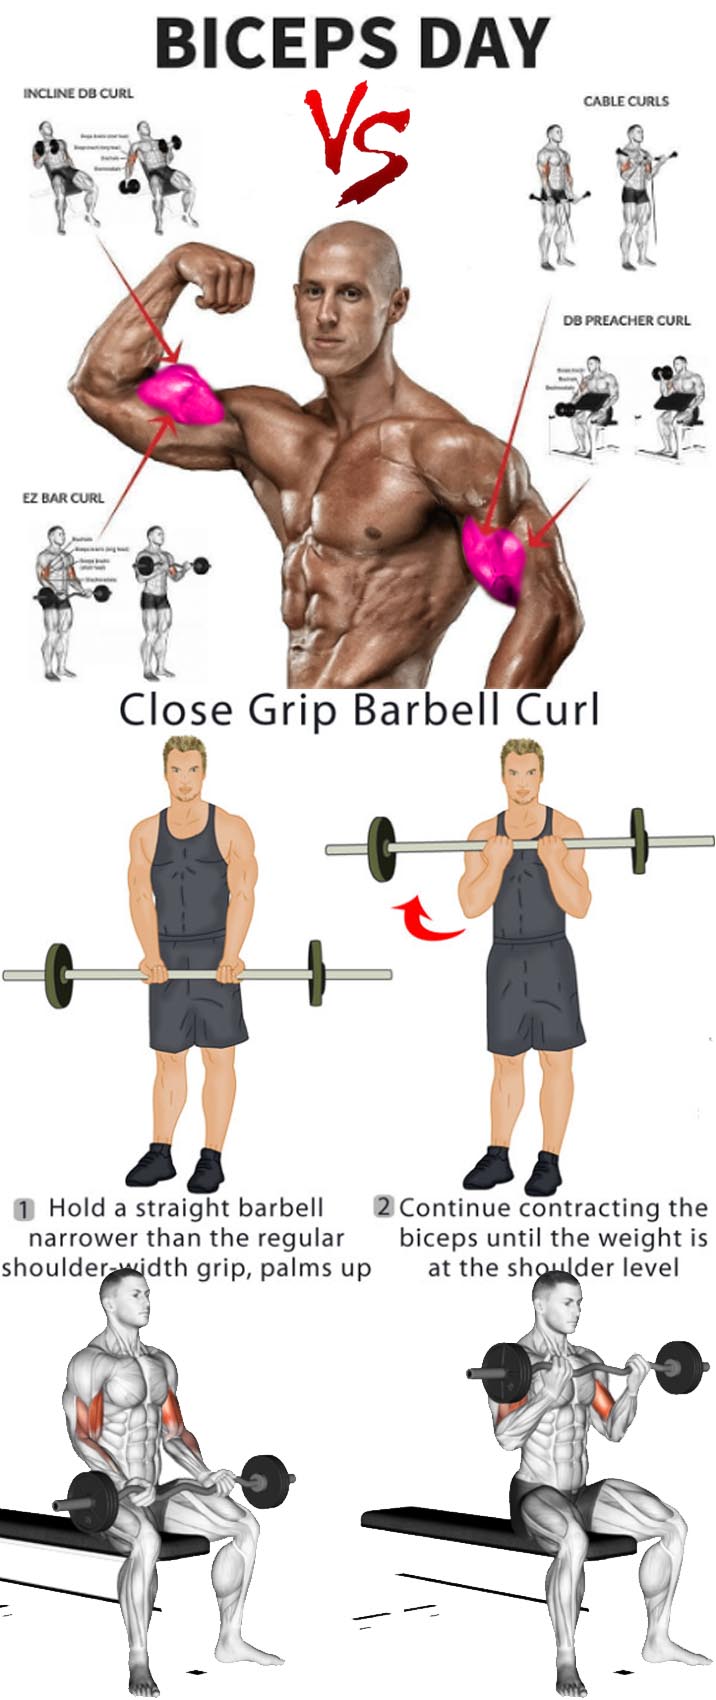 Biceps Day & Tips